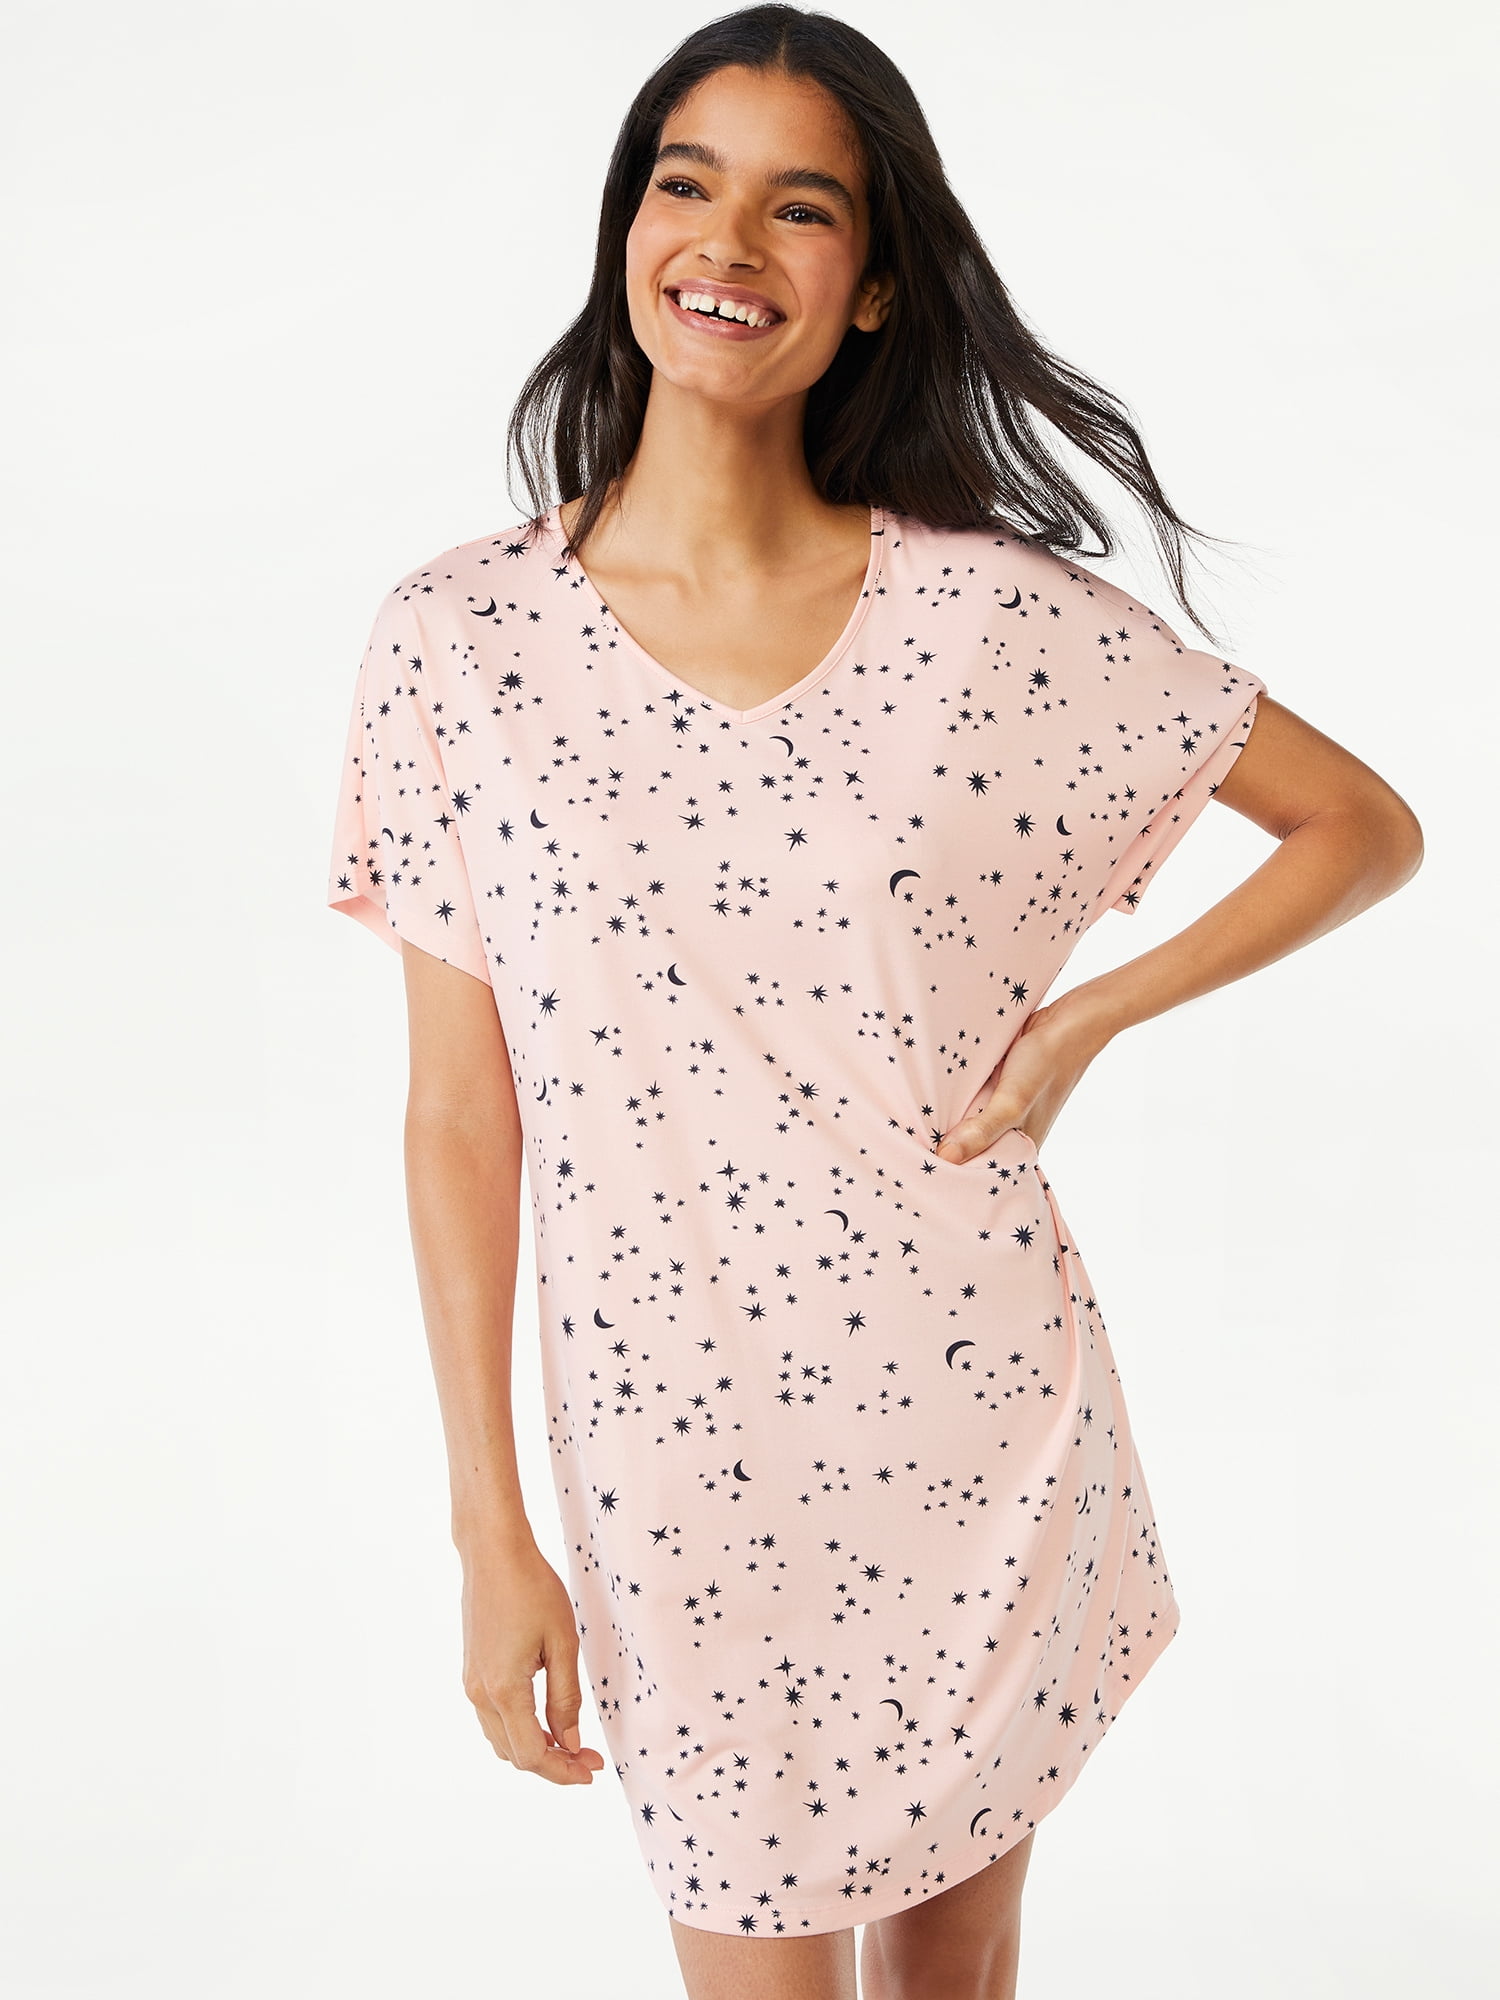 Joyspun Women's Star Print Sleep Shirt, Sizes up to 3X